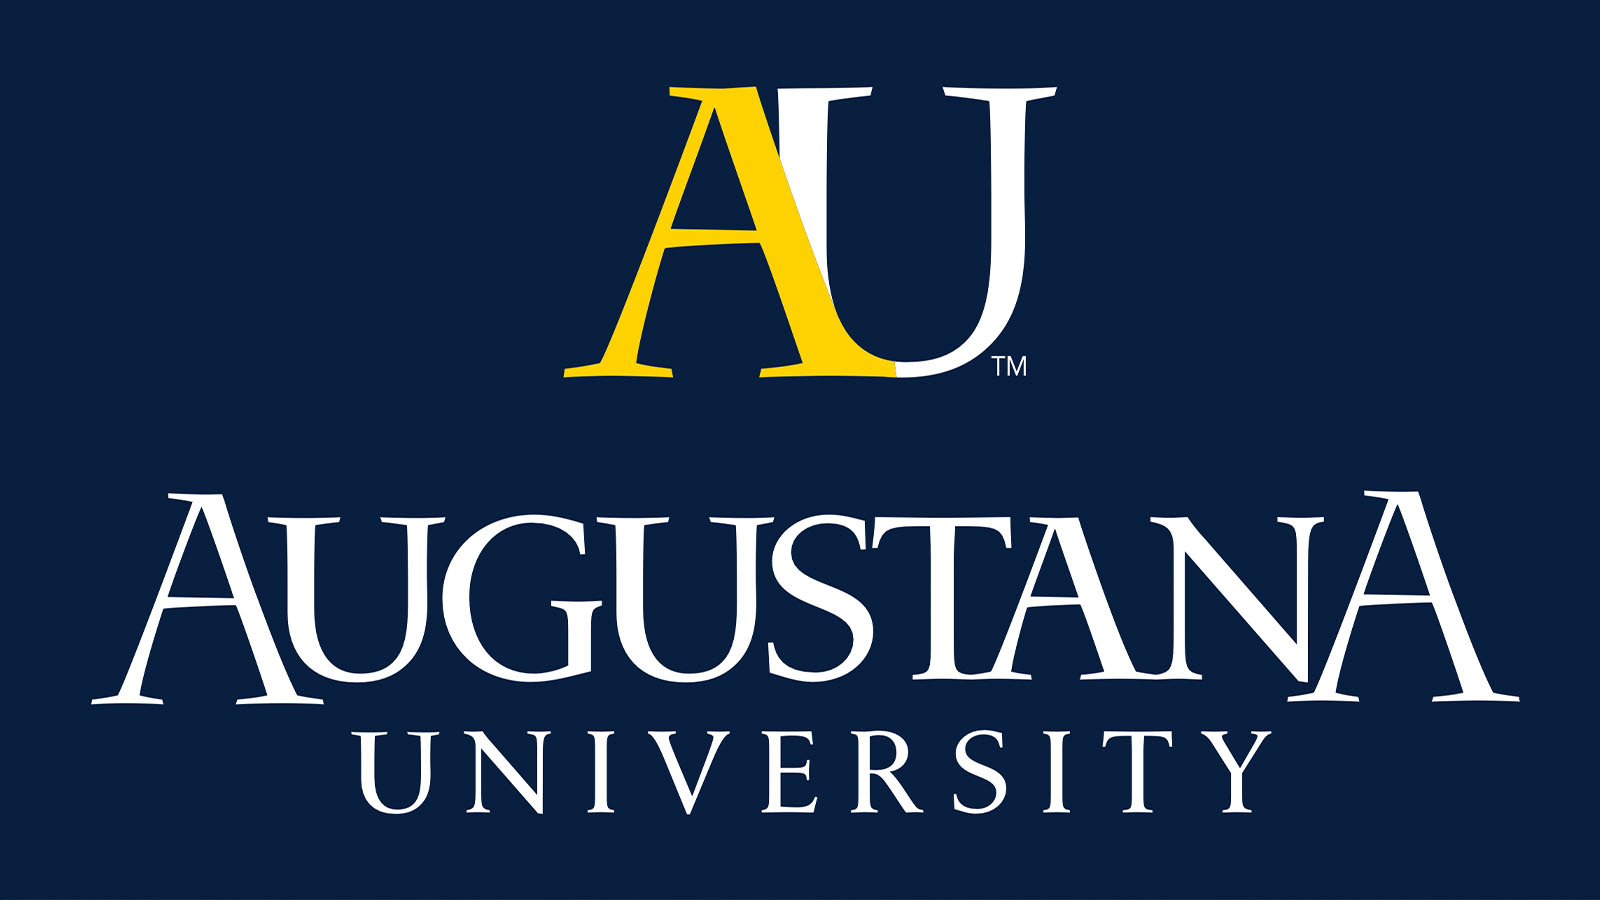 Augustana University